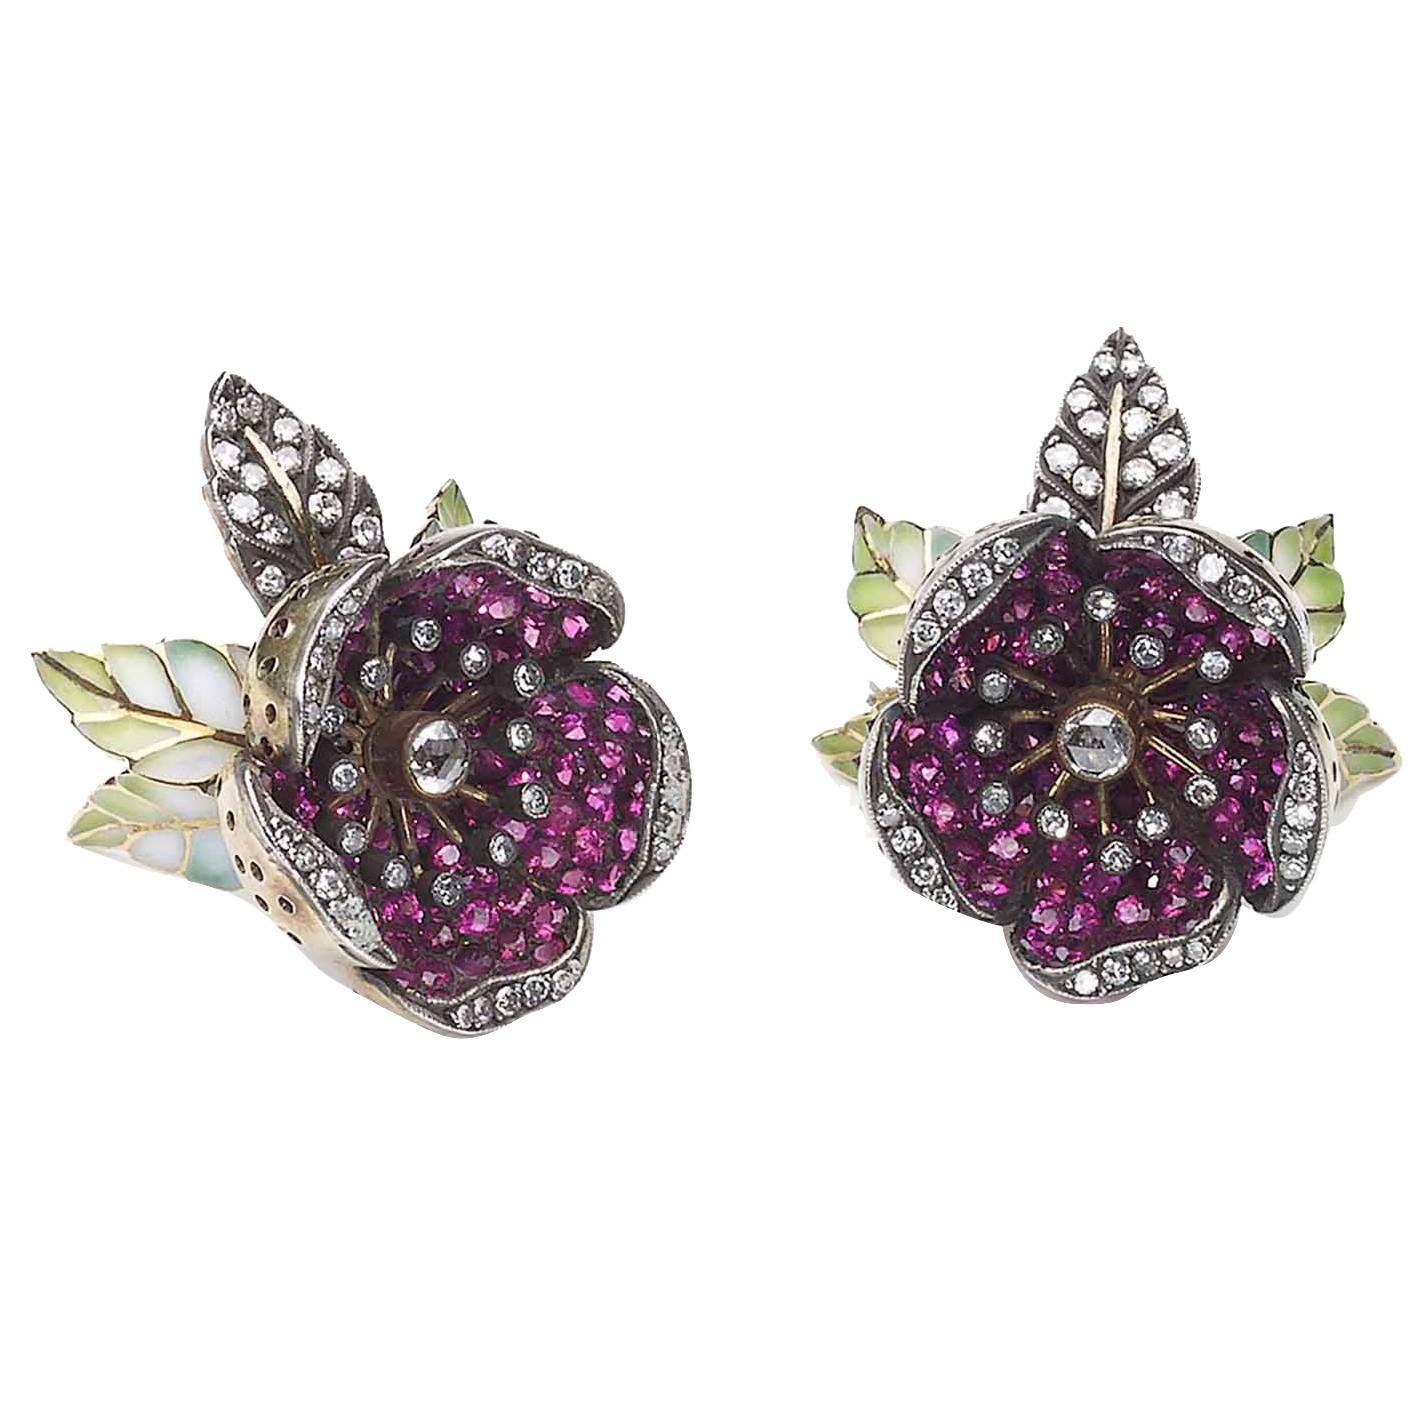 Moira Ruby Diamond Flower Earrings With Plique à Jour Enamel Leaves